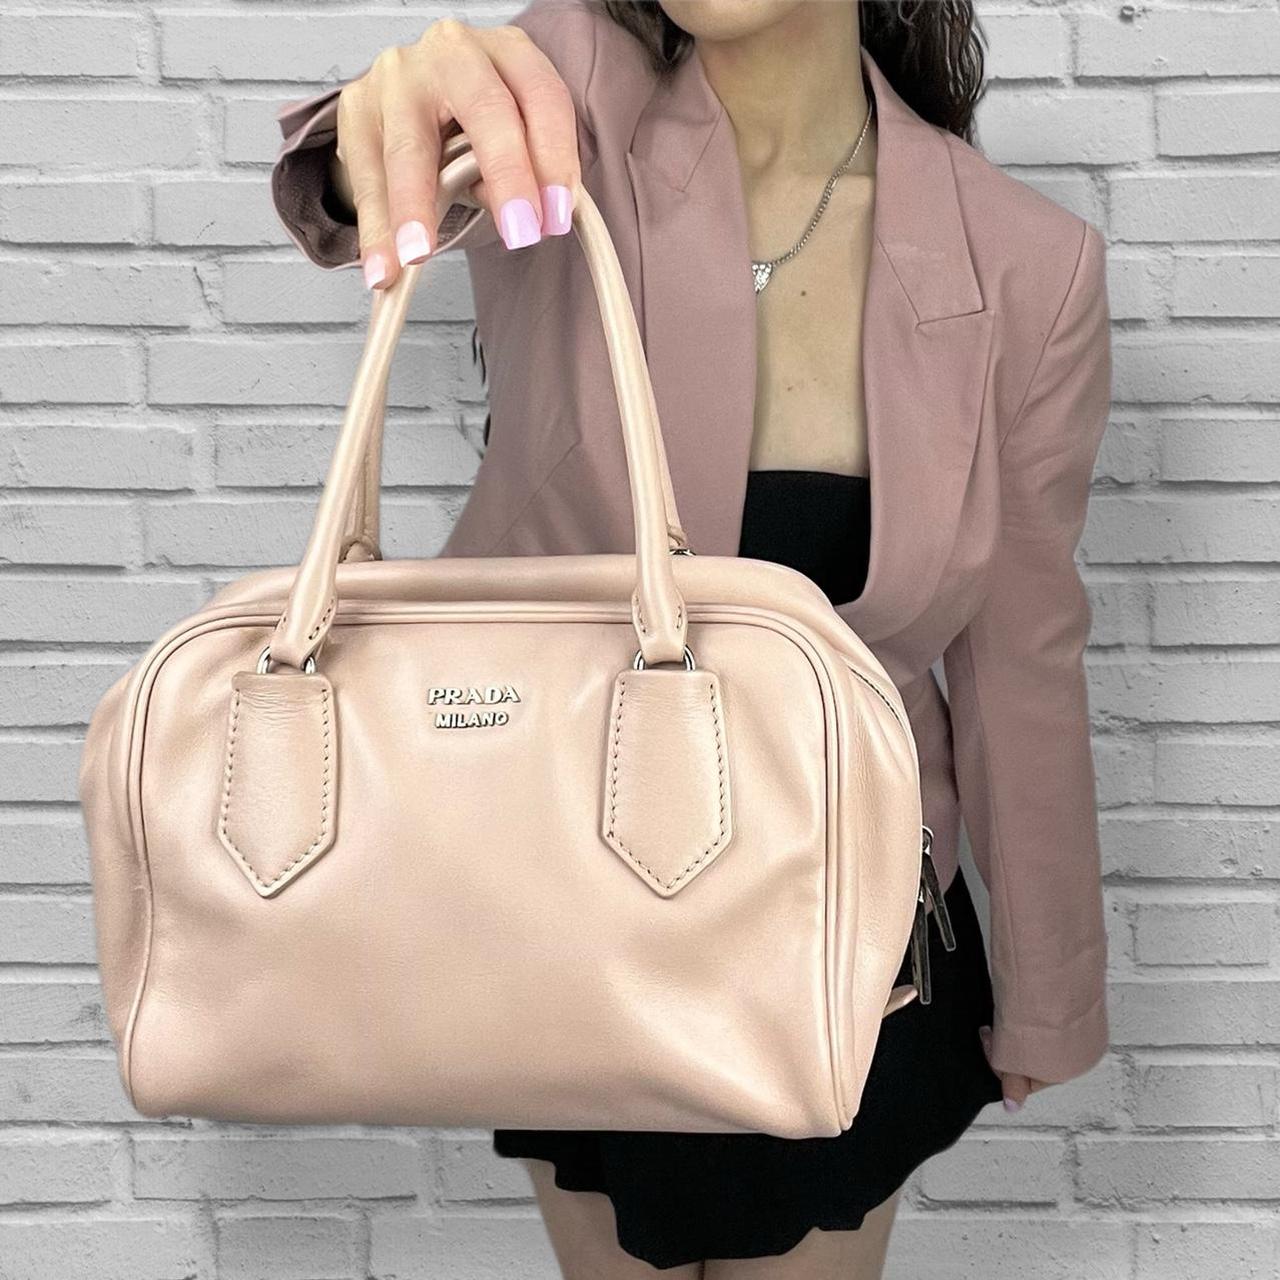 Prada Women's Pink and Green Bag | Depop